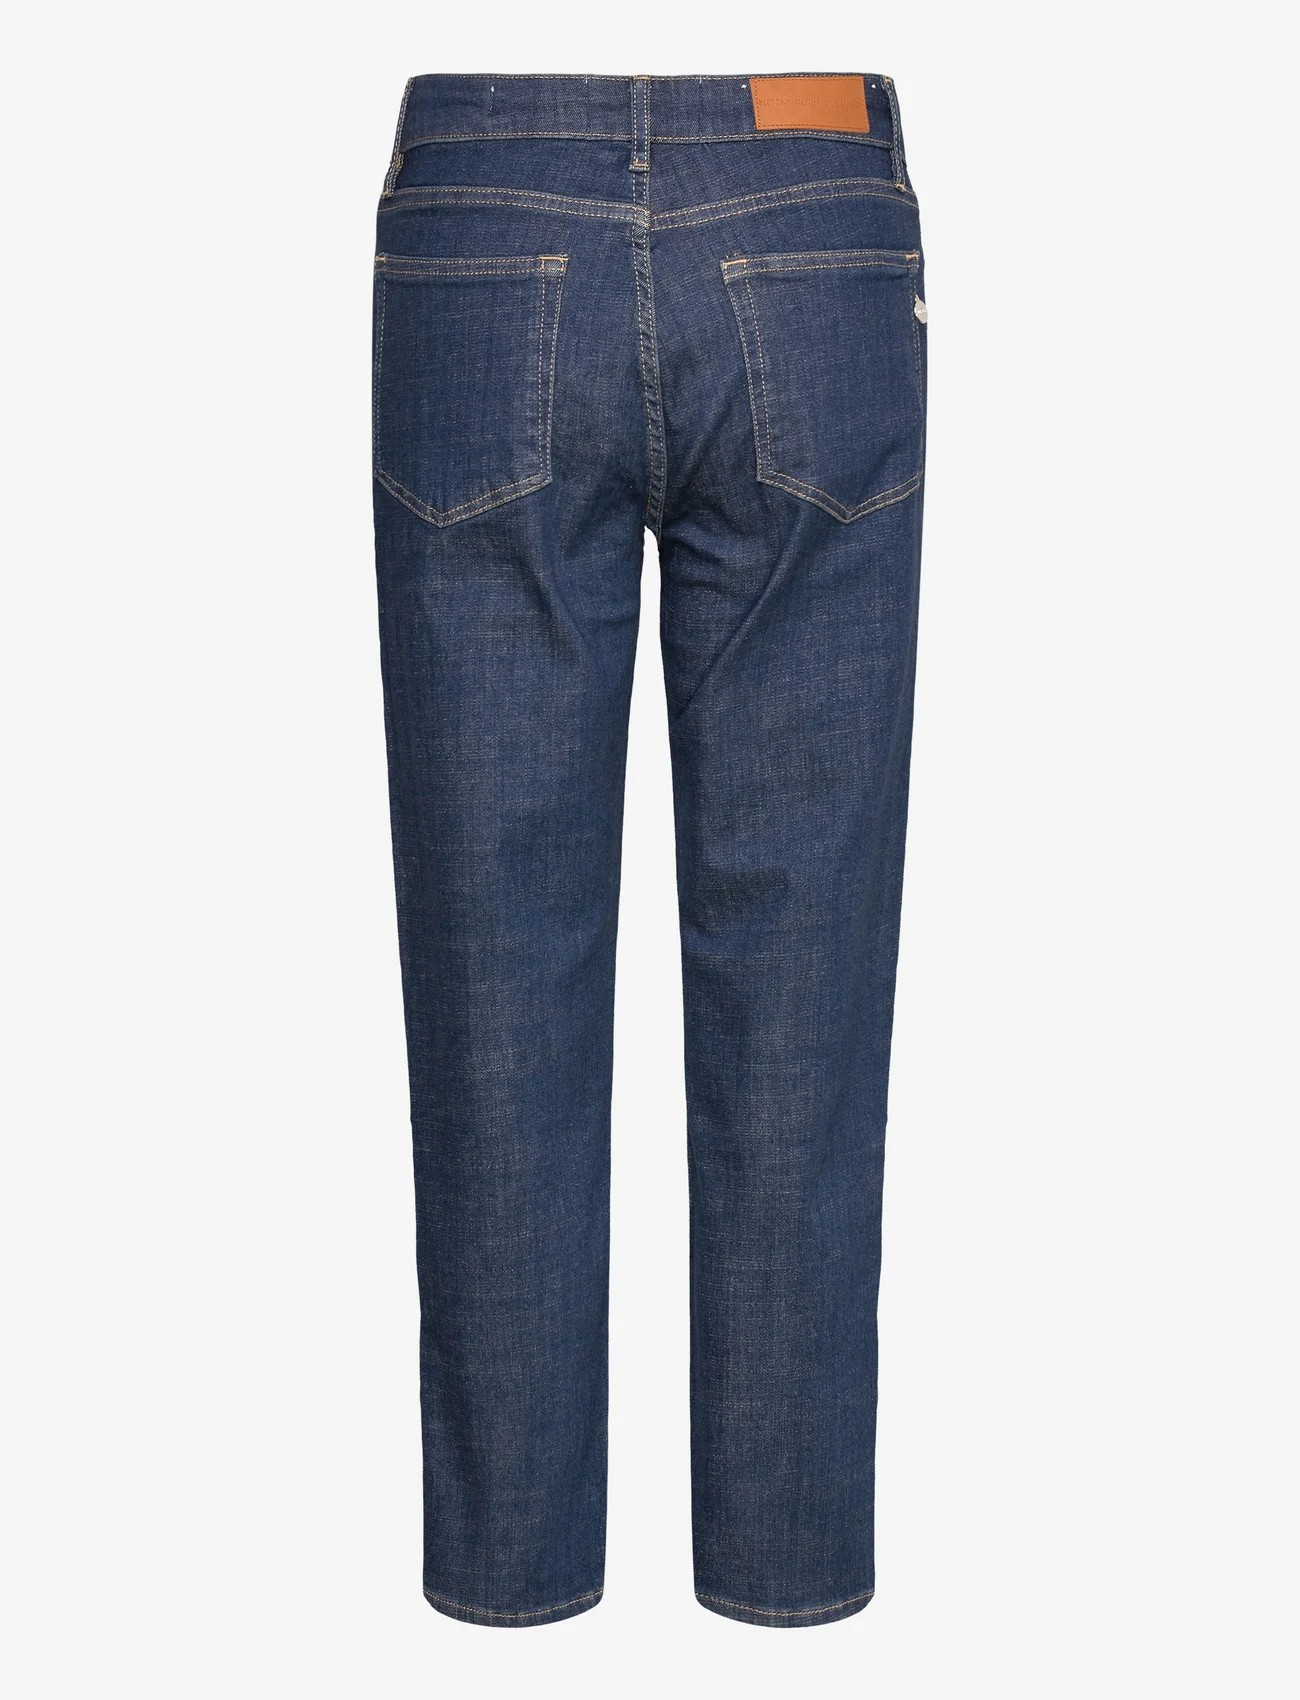 Pieszak - PD-Trisha Jeans Wash Titanium Blue - straight jeans - denim blue - 1